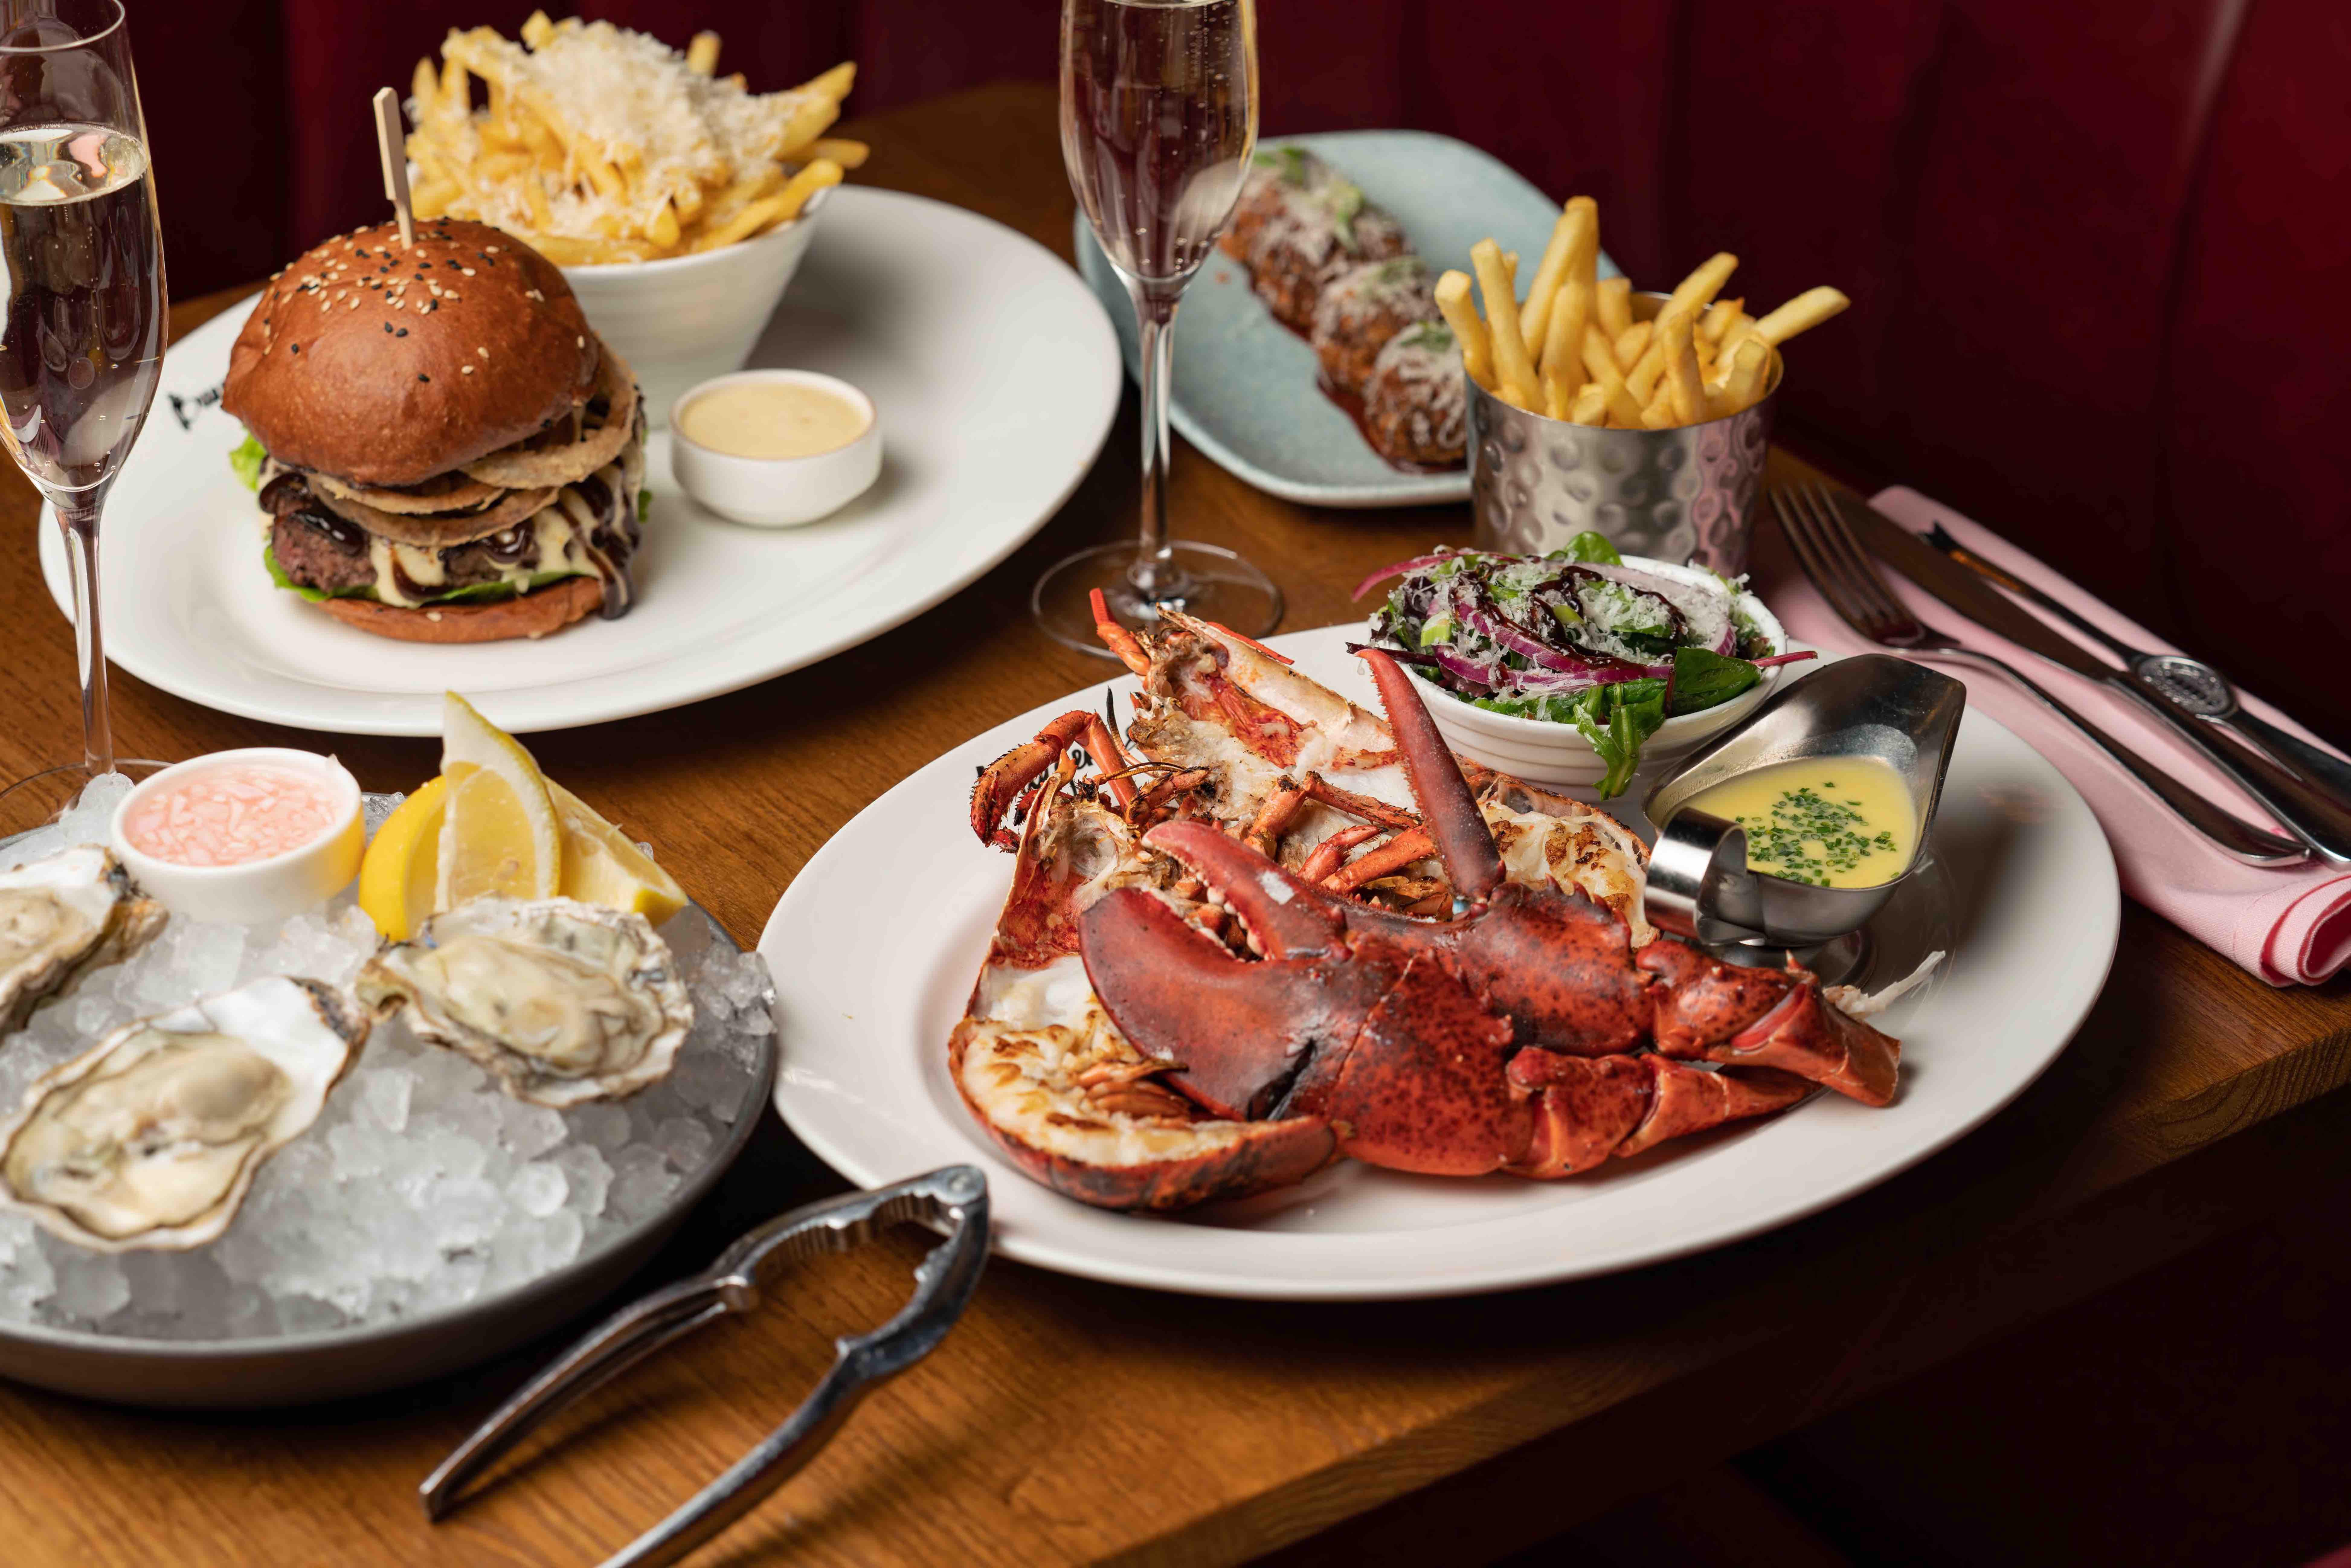 Images Burger & Lobster Mayfair